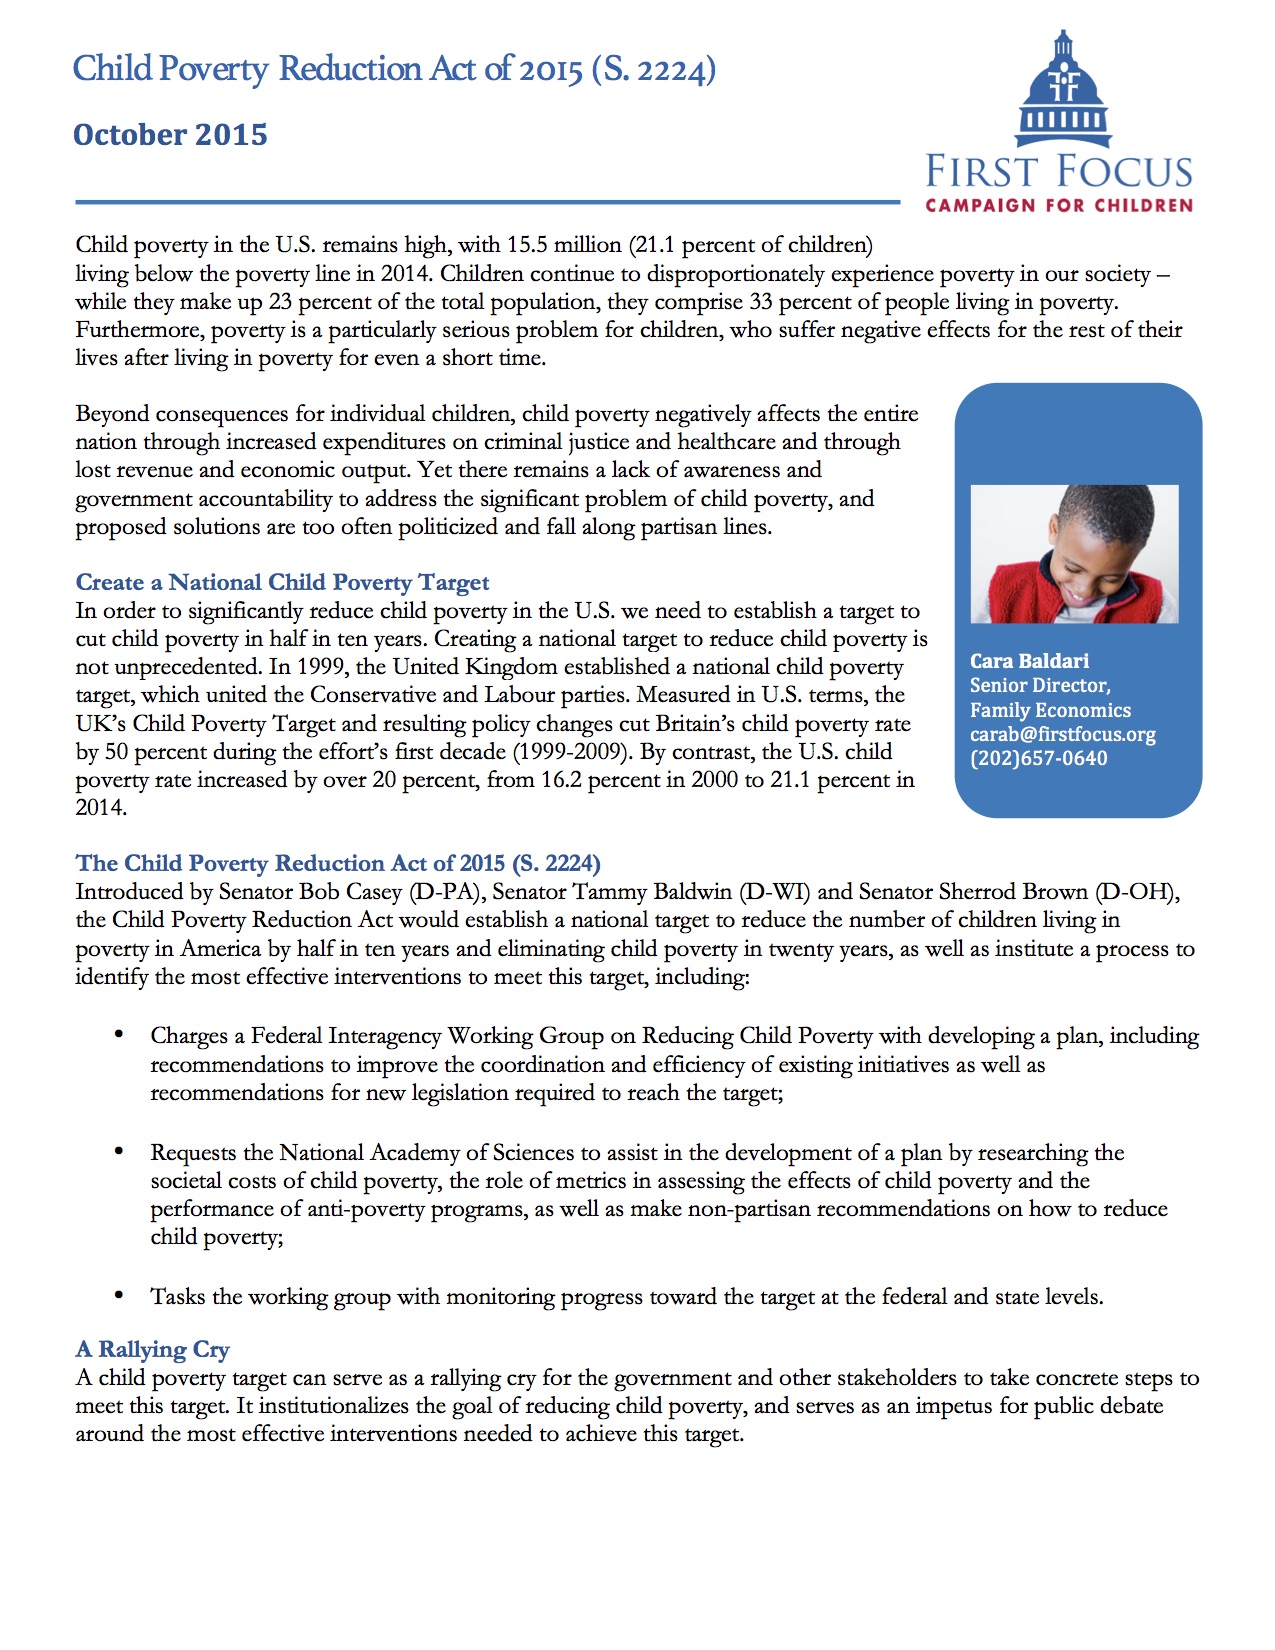 Child Poverty Reduction Act Fact Sheet - Senate version